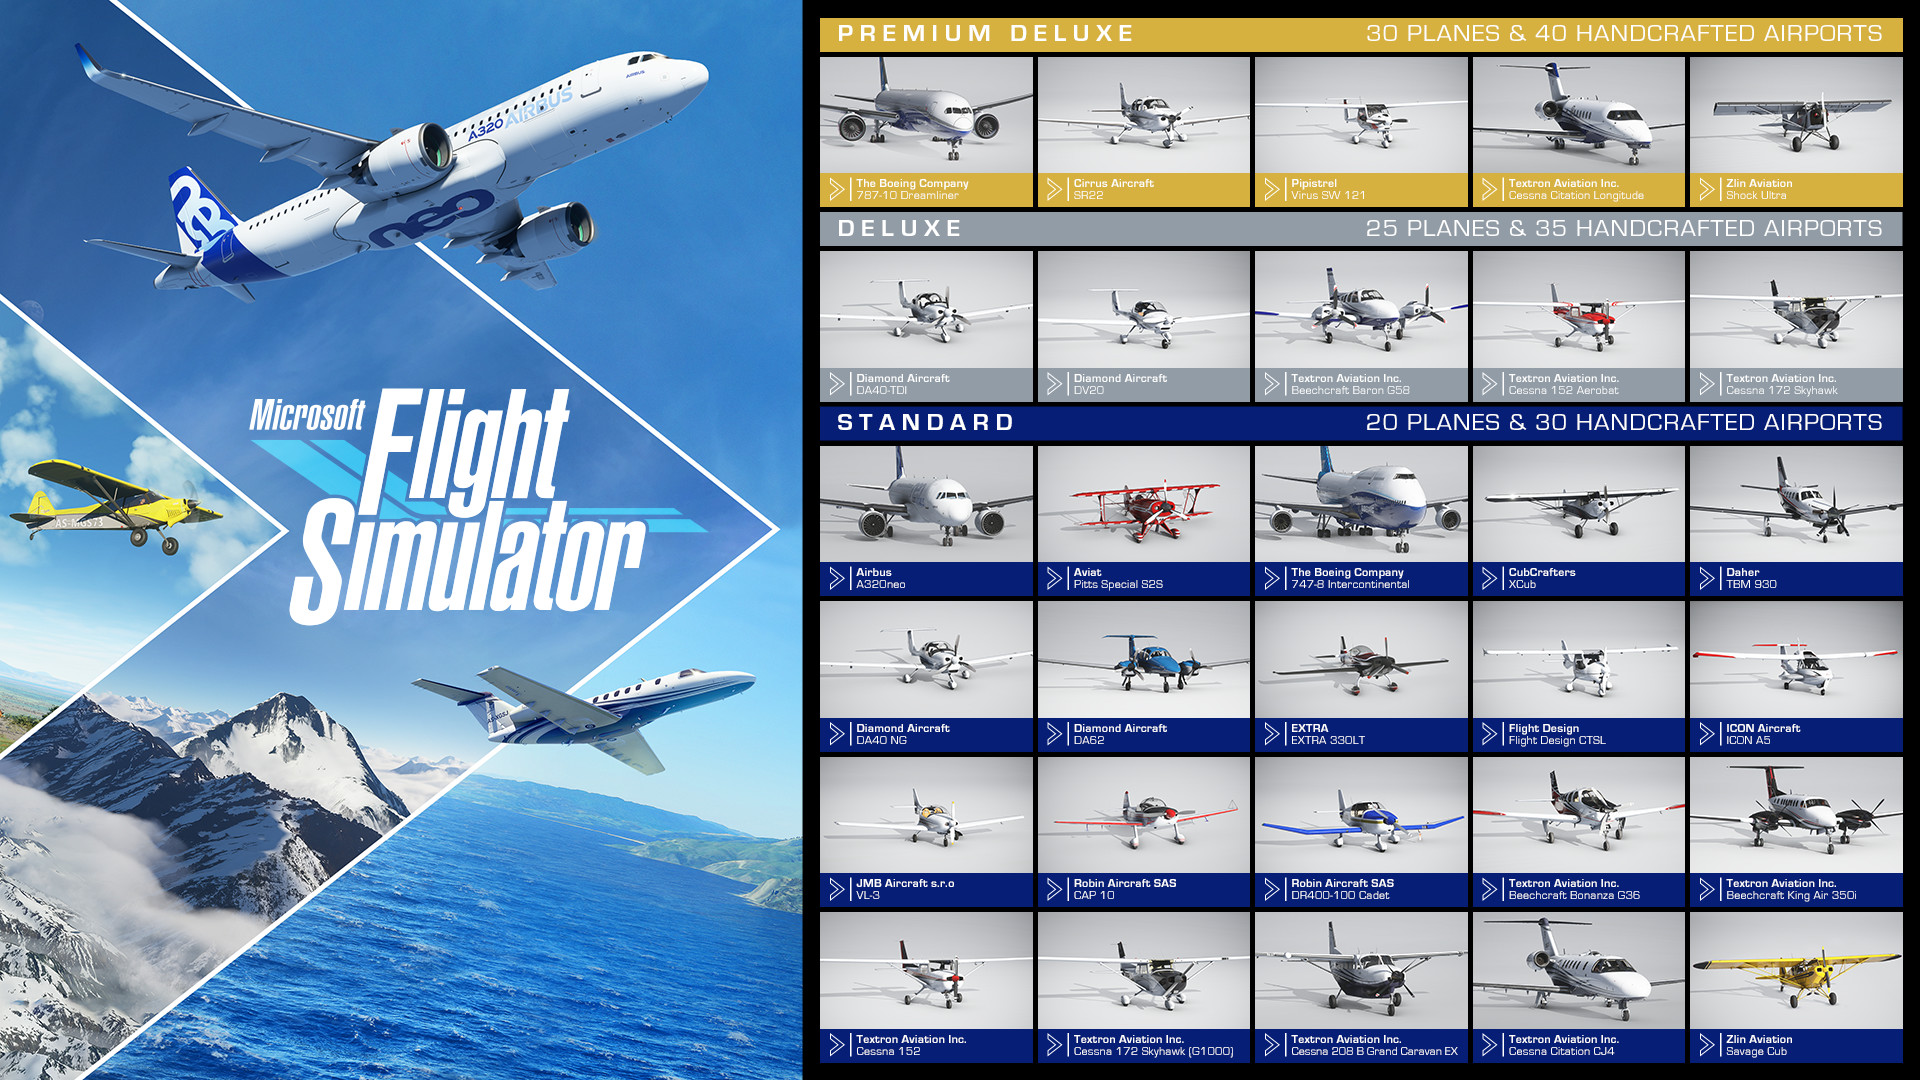 (102.81$) Microsoft Flight Simulator Premium Deluxe Game of the Year Edition EU Xbox Series X|S / Windows 10 CD Key